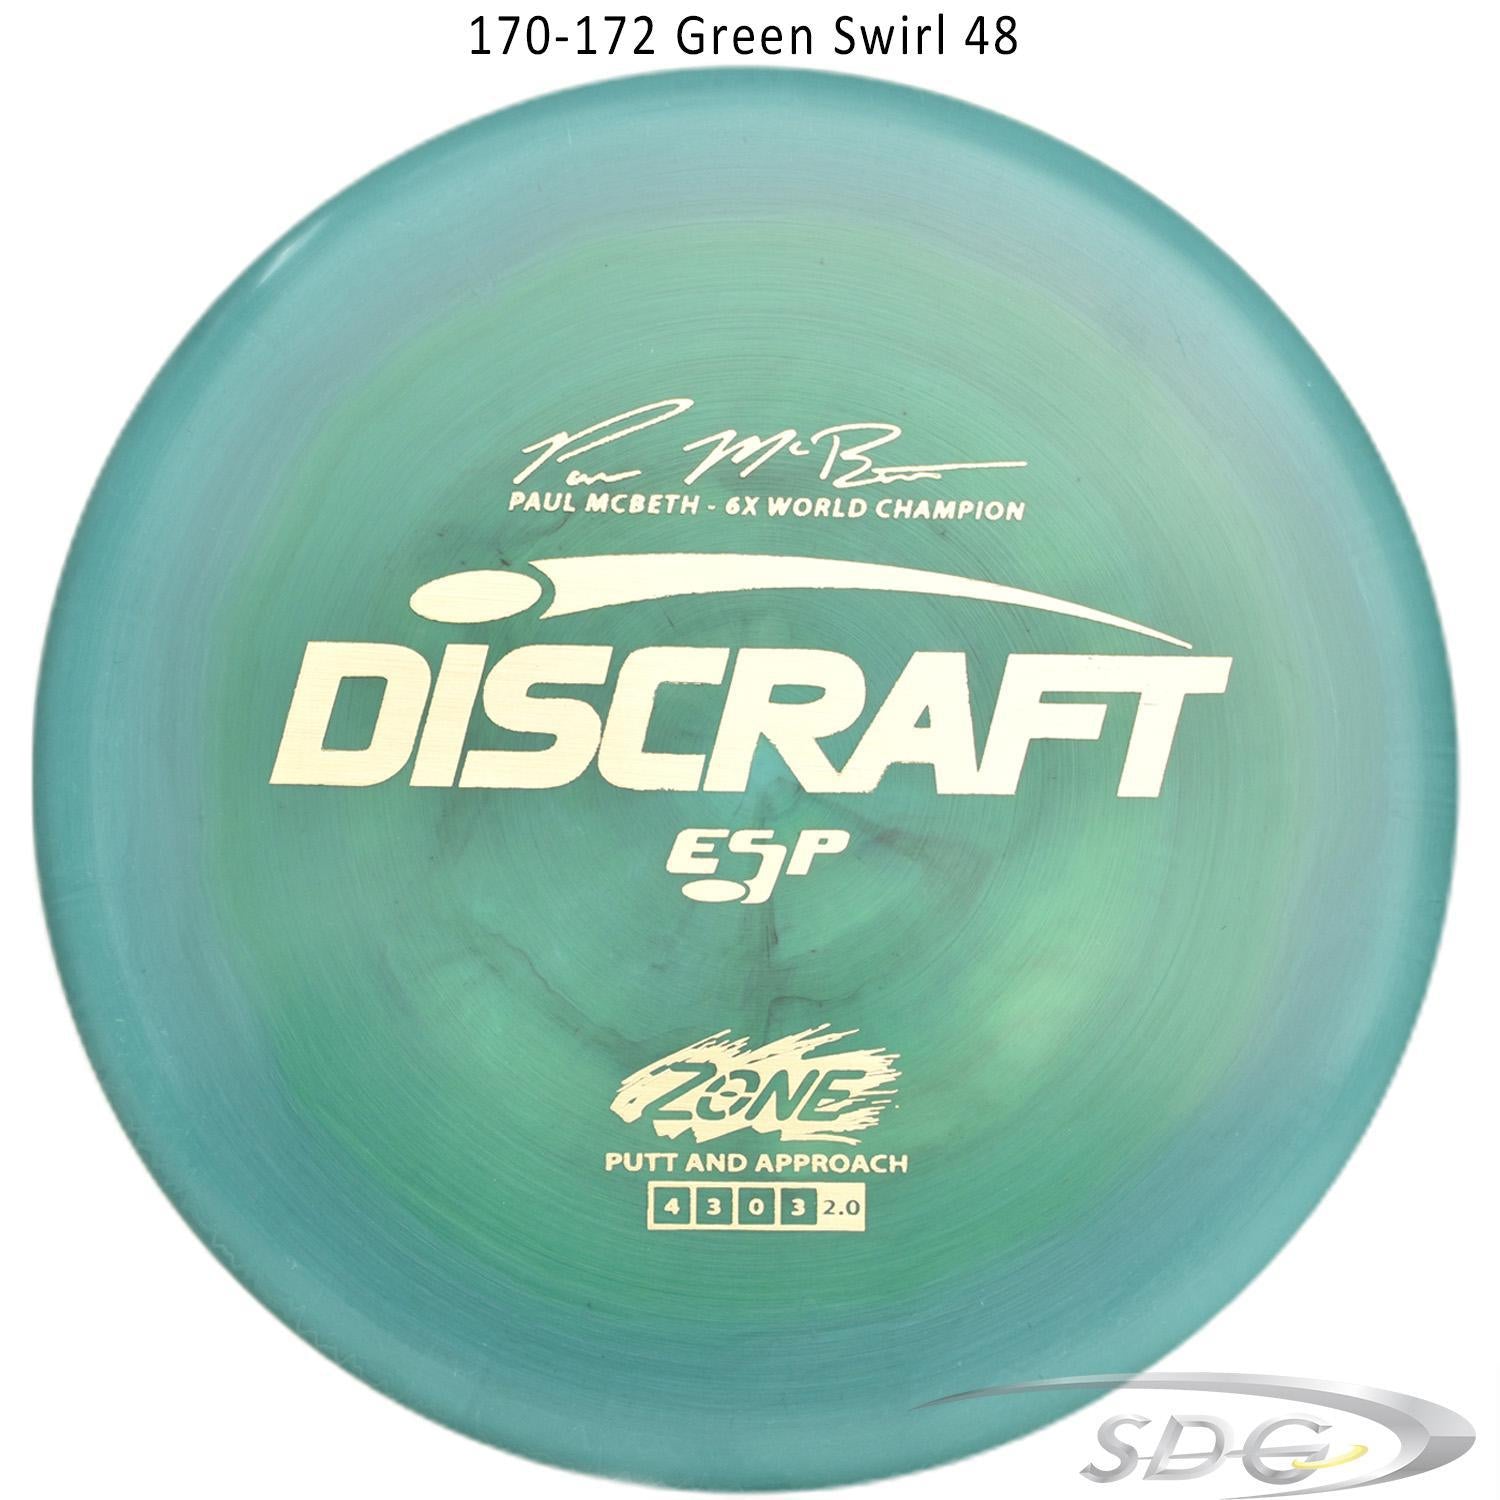 discraft-esp-zone-6x-paul-mcbeth-signature-series-disc-golf-putter-172-170-weights 170-172 Green Swirl 48 